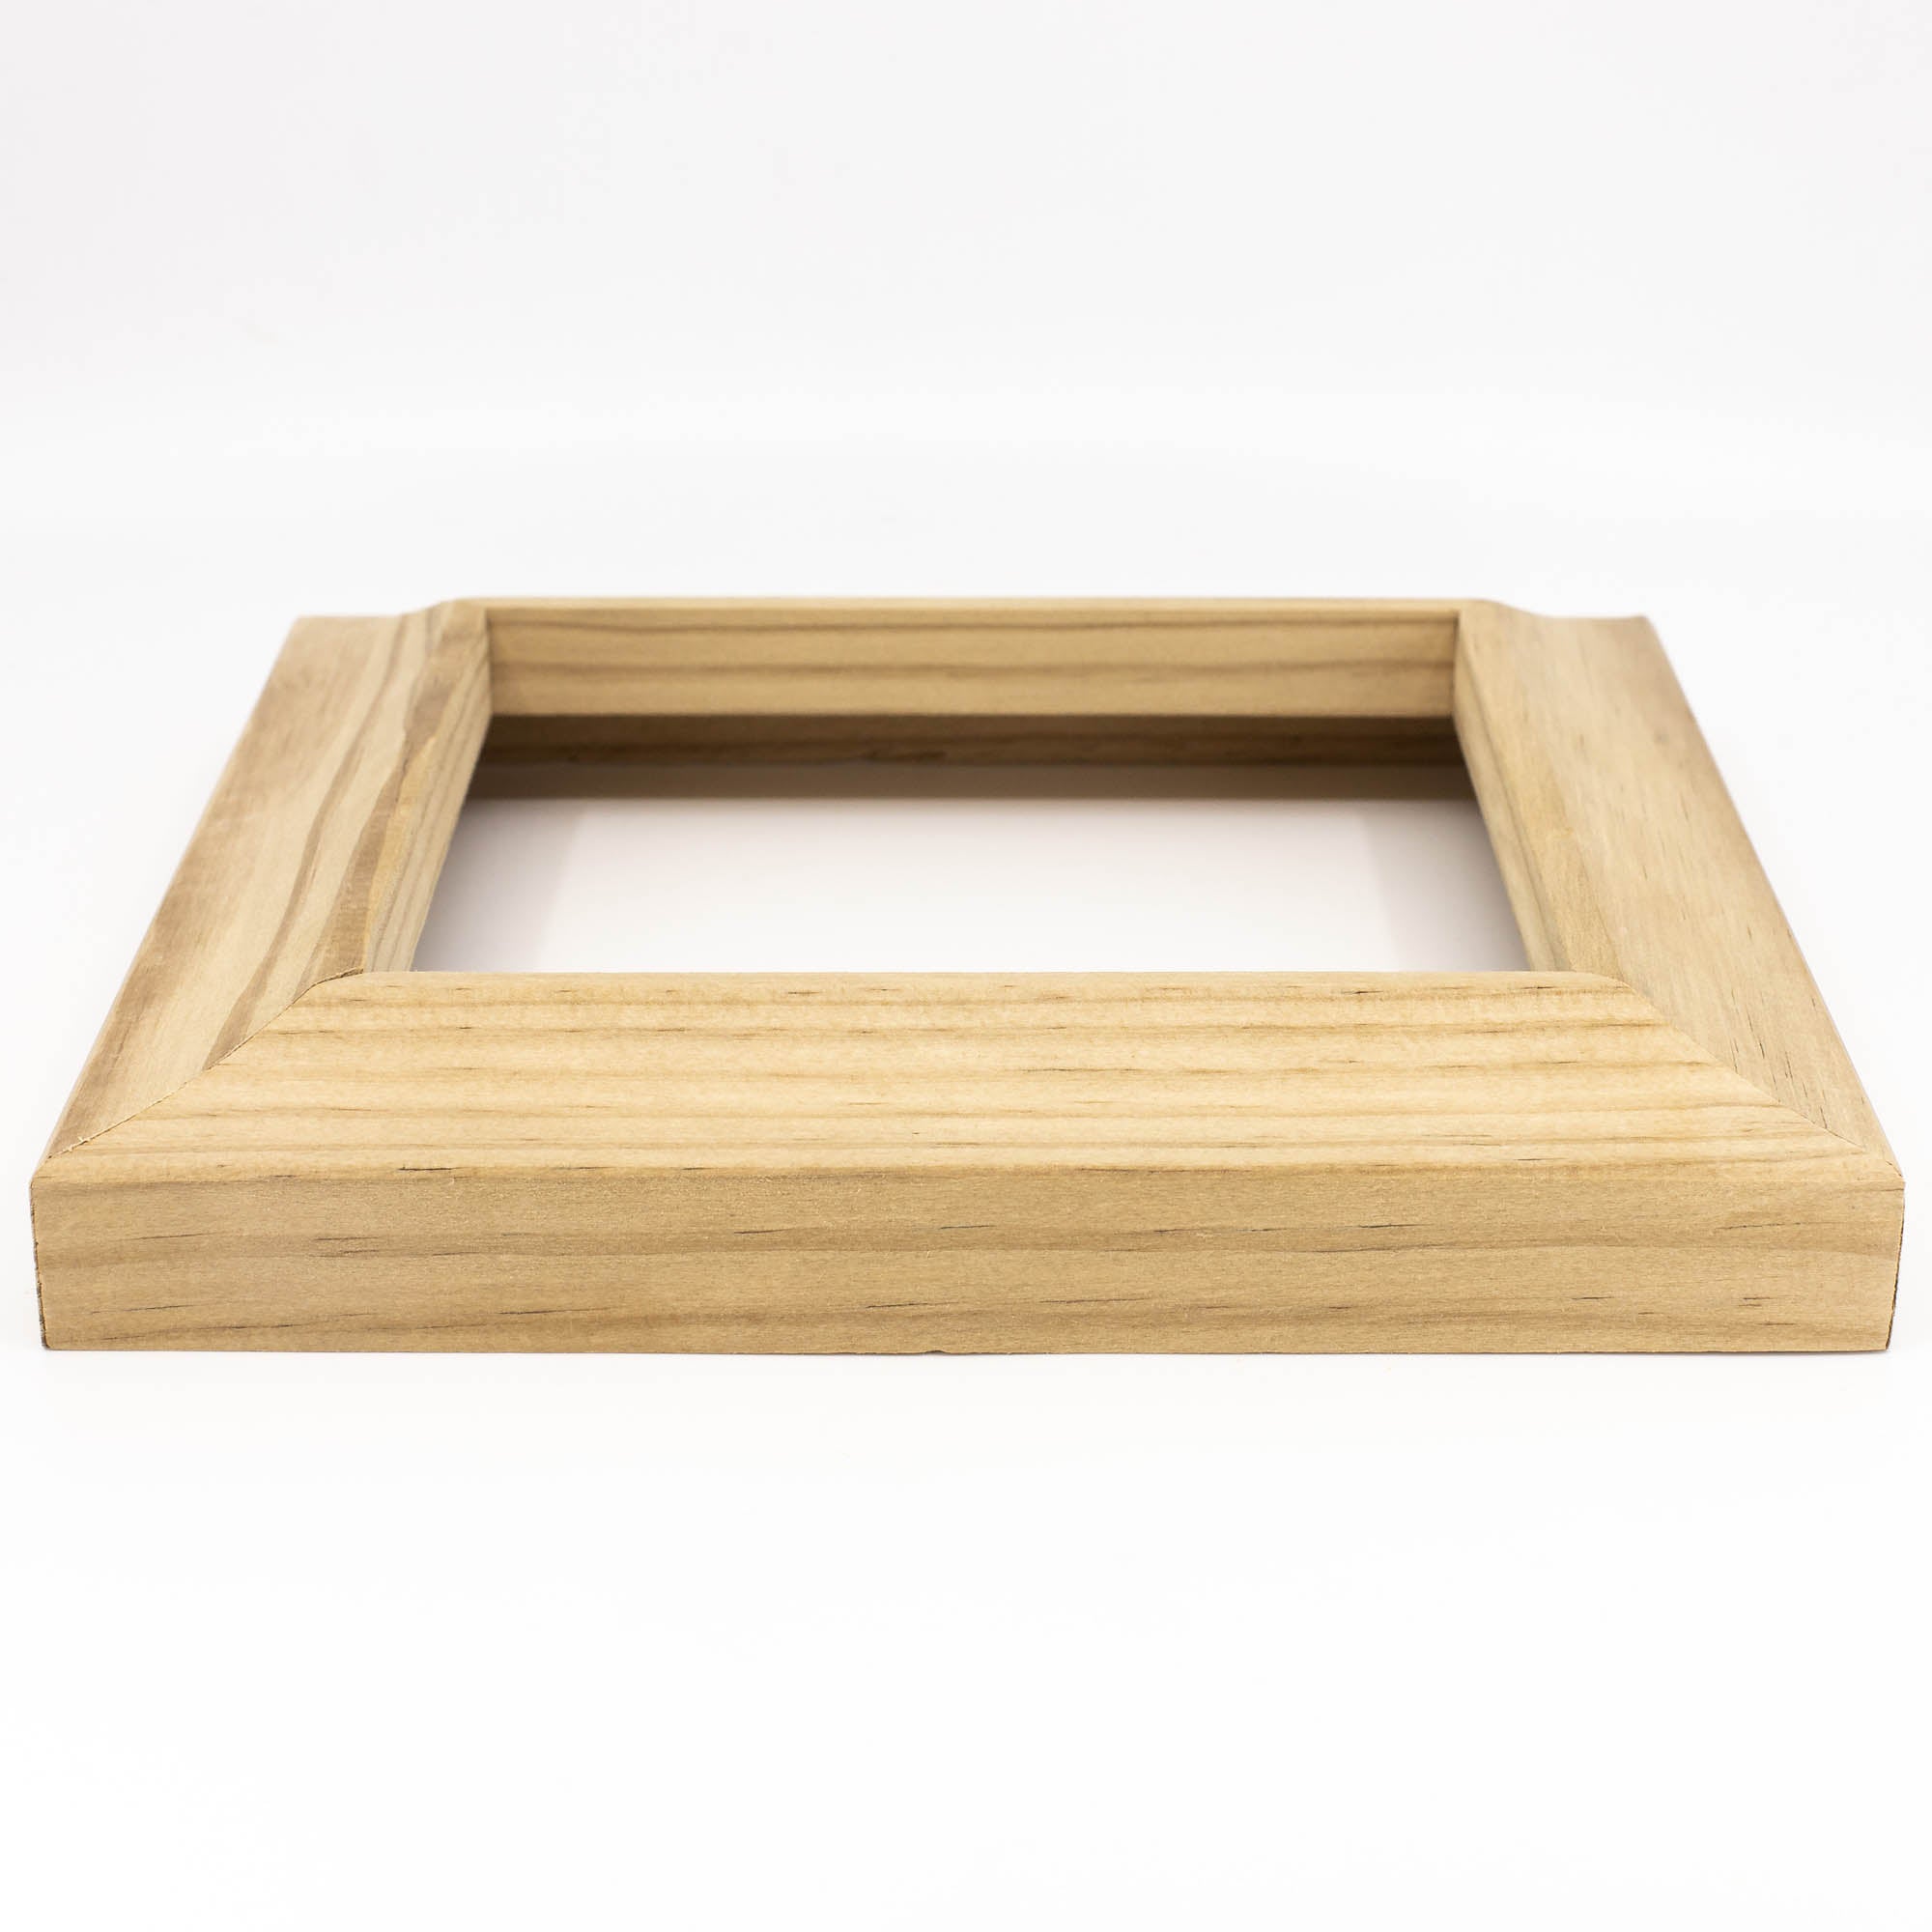 4x4 Triple Bundle - Treated Pine/Cedar